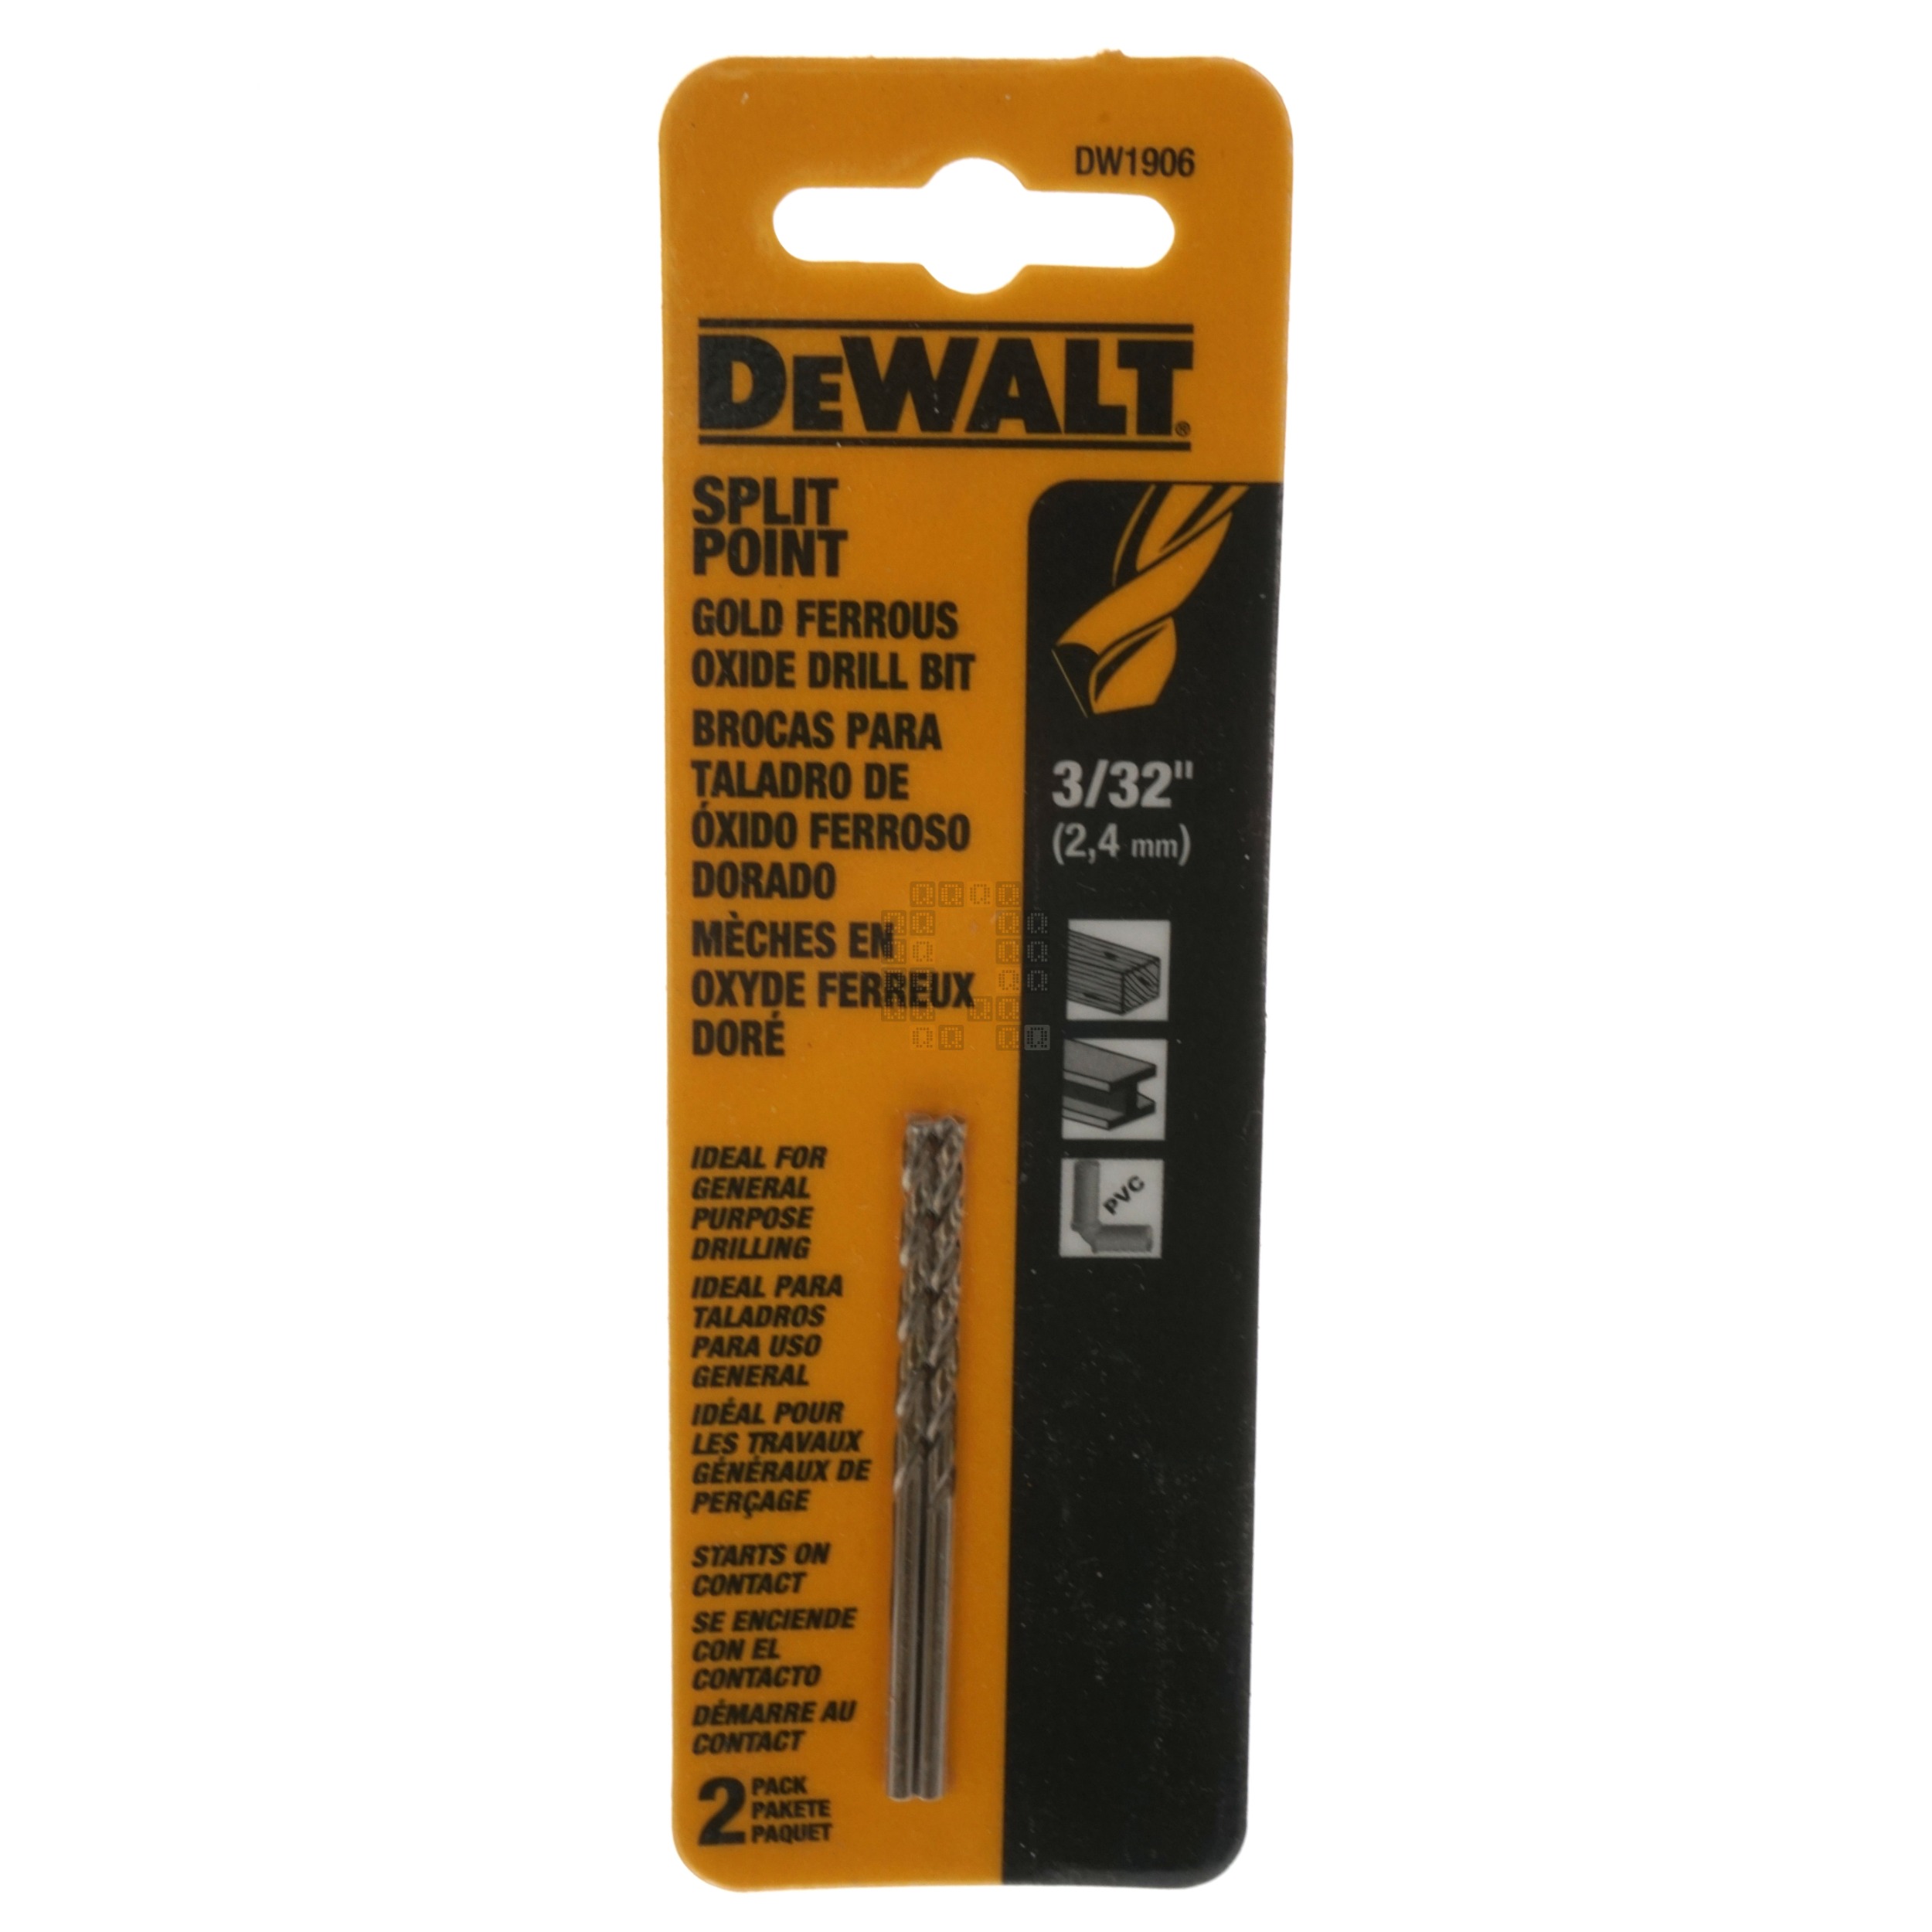 DeWALT DW1906 3/32" Split Point Gold Ferrous Oxide Drill Bit, 2-Pack